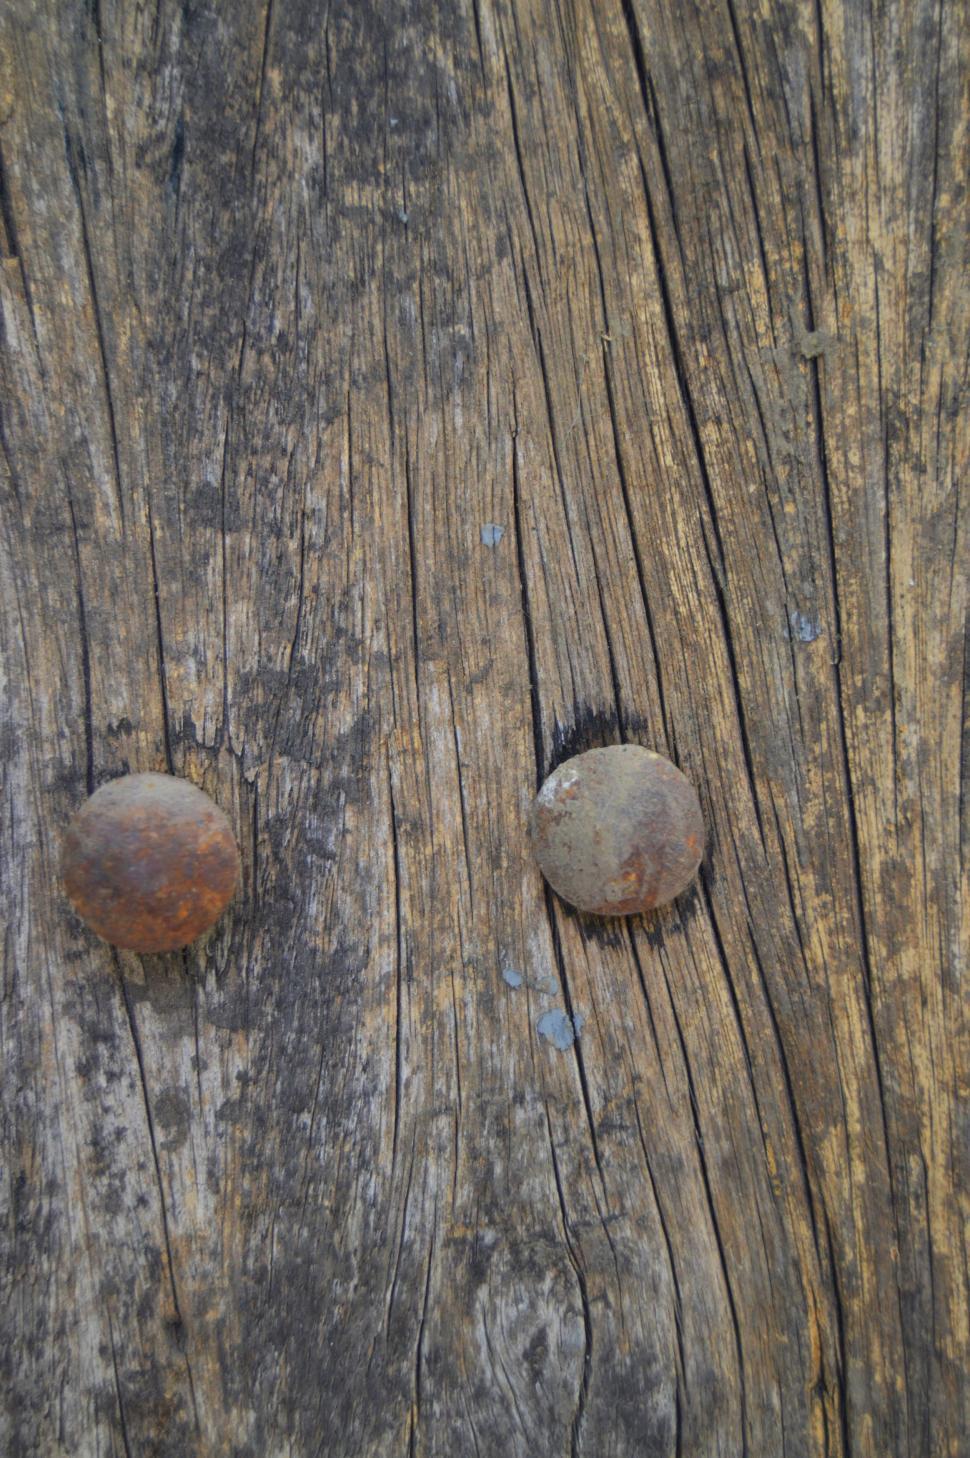 Free Image of Nails on Wood 